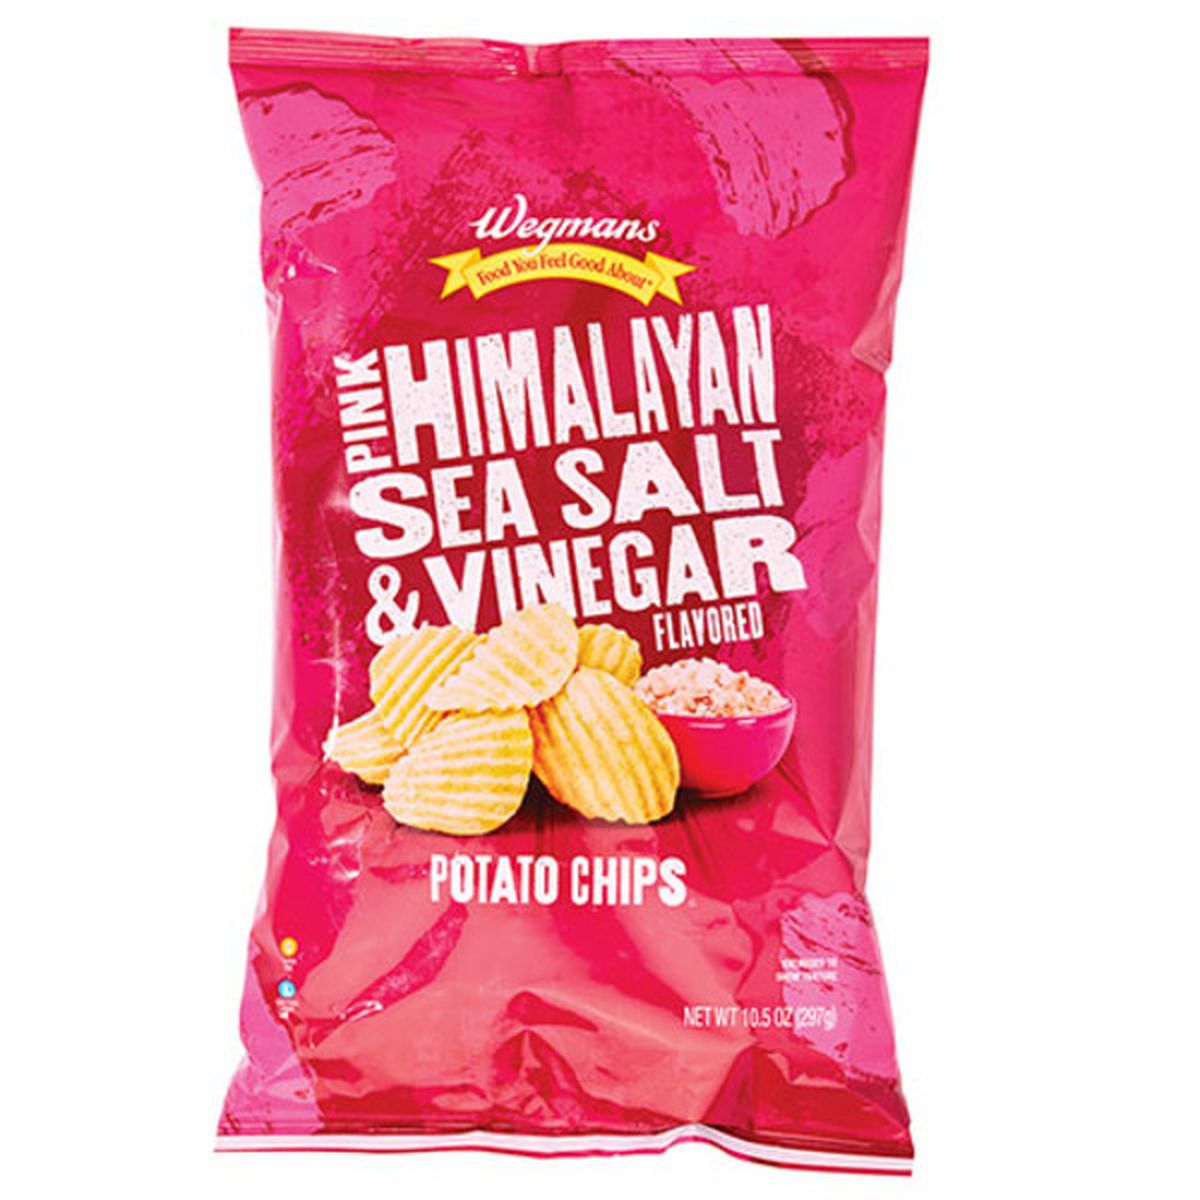 Calories in Wegmans Pink Himalayan Sea Salt & Vinegar Flavored Potato Chips